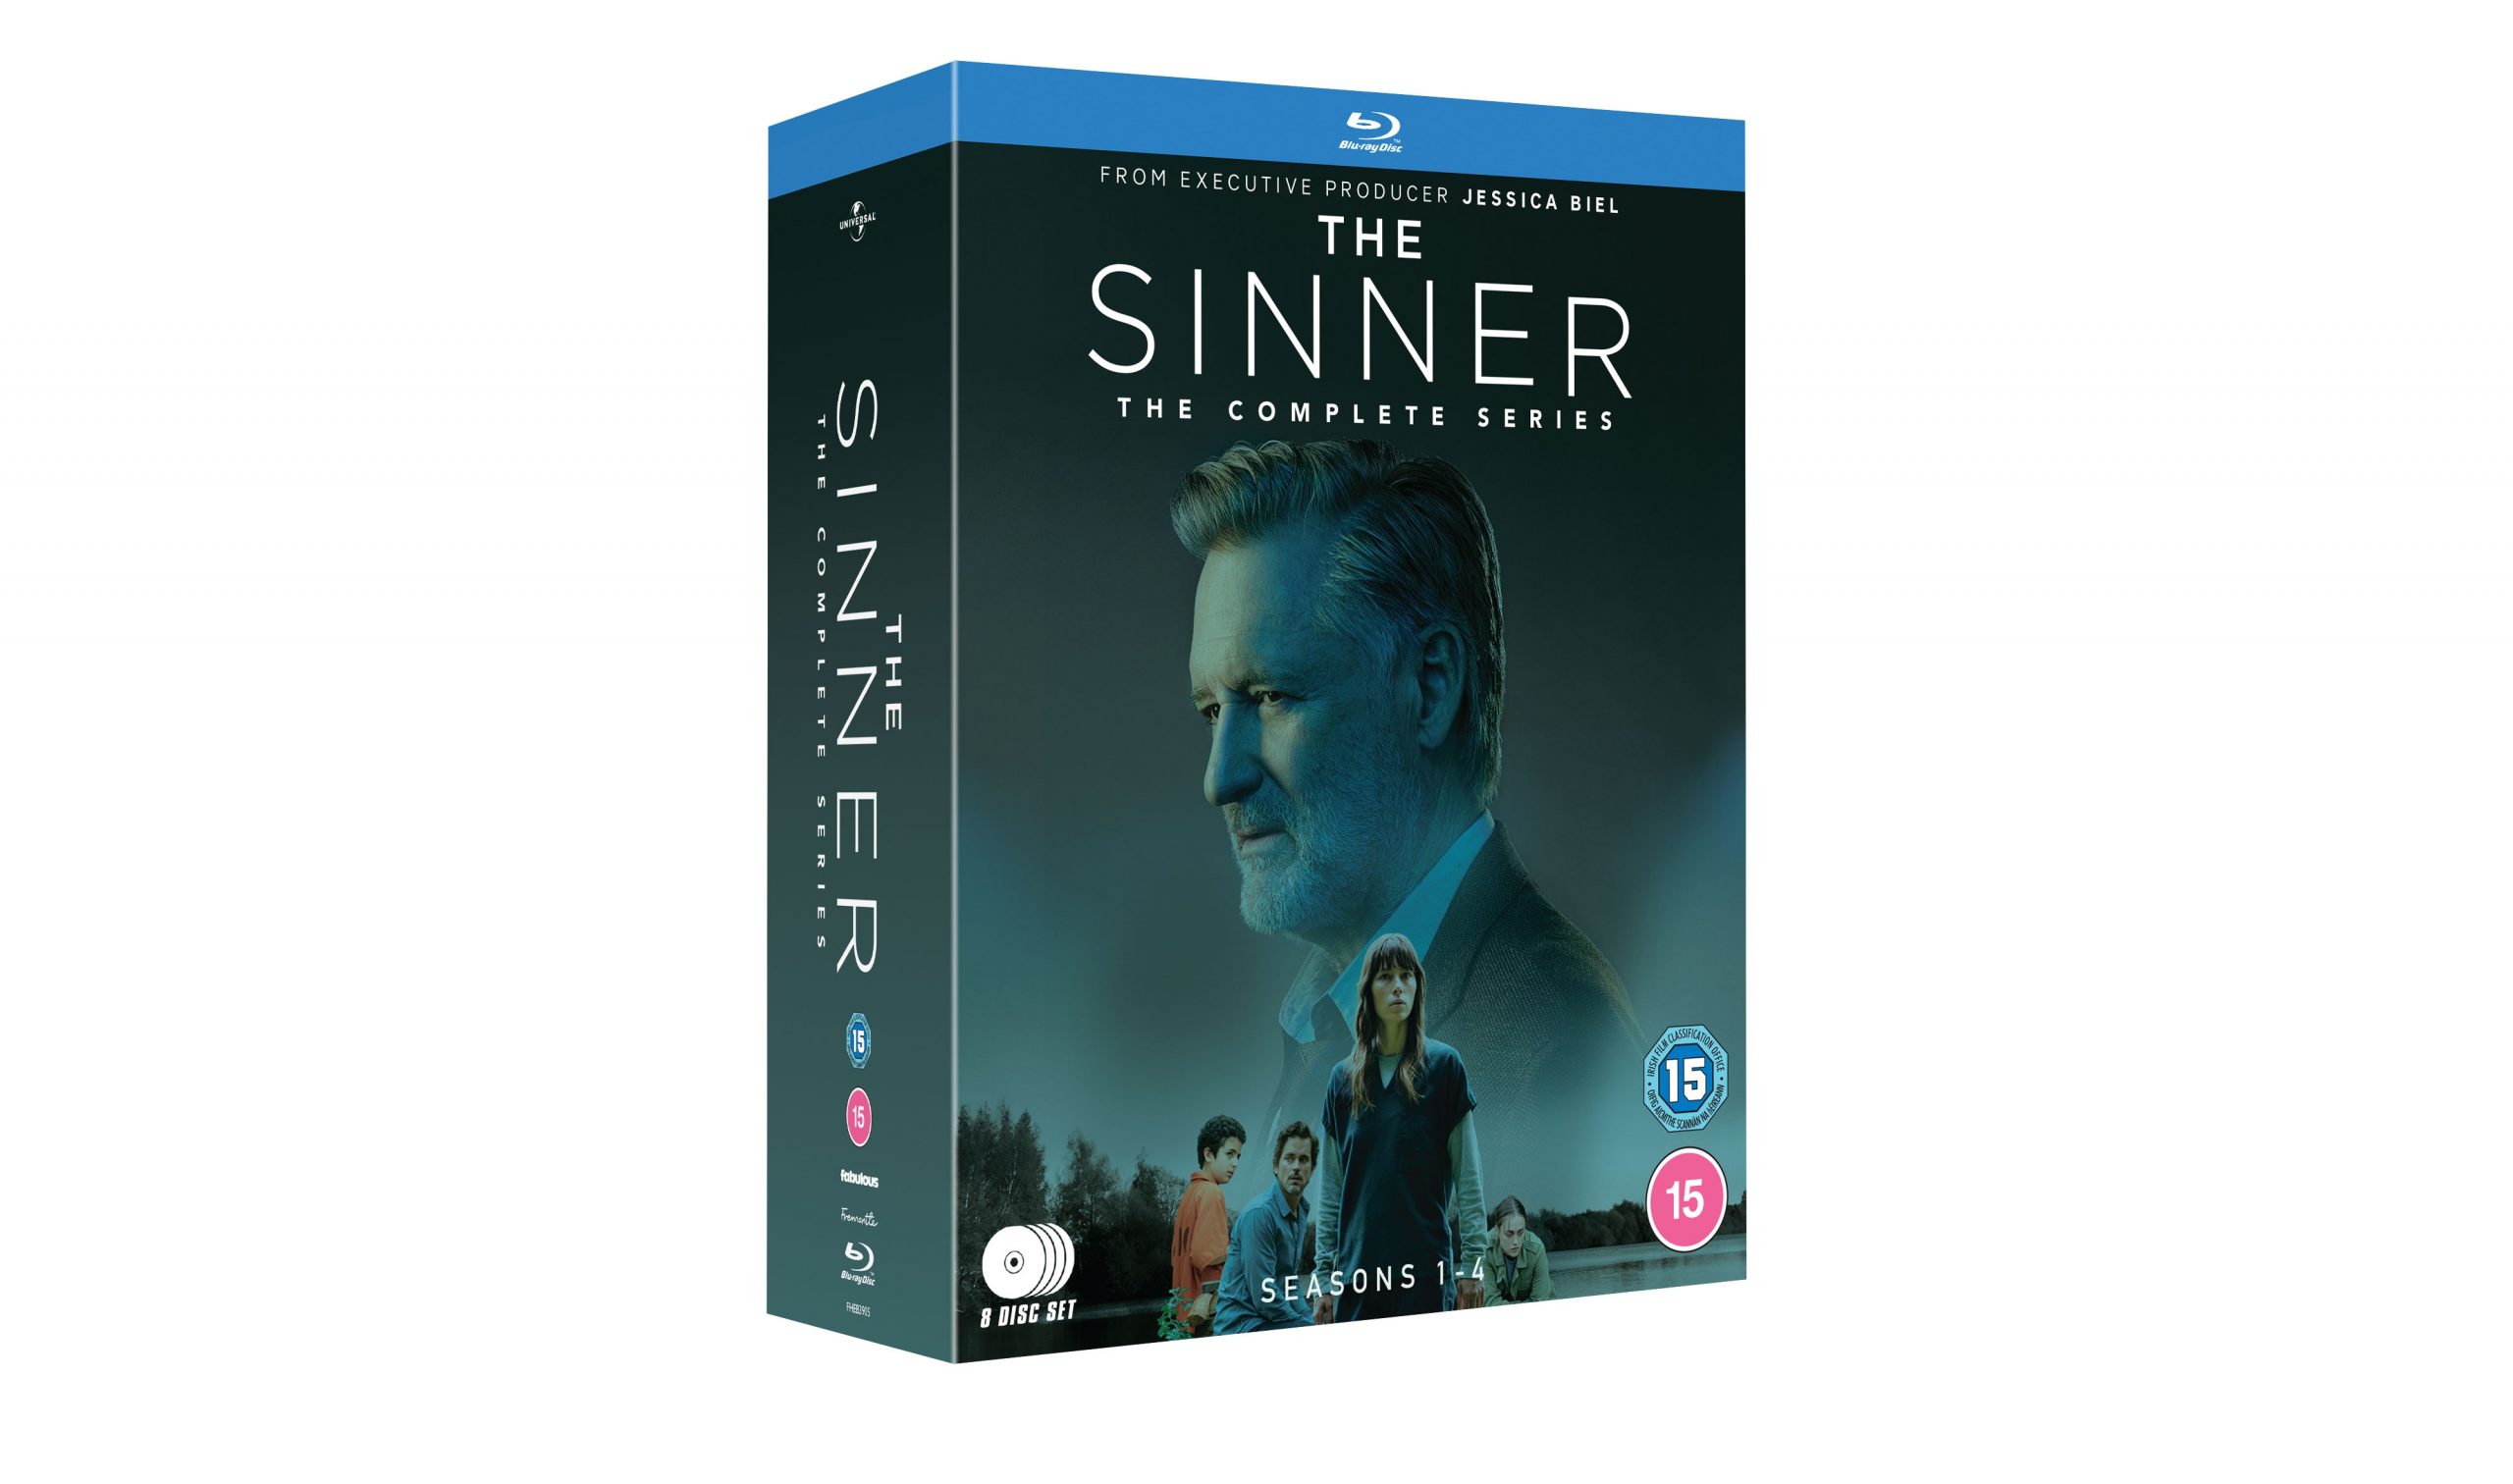 The Sinner Boxset